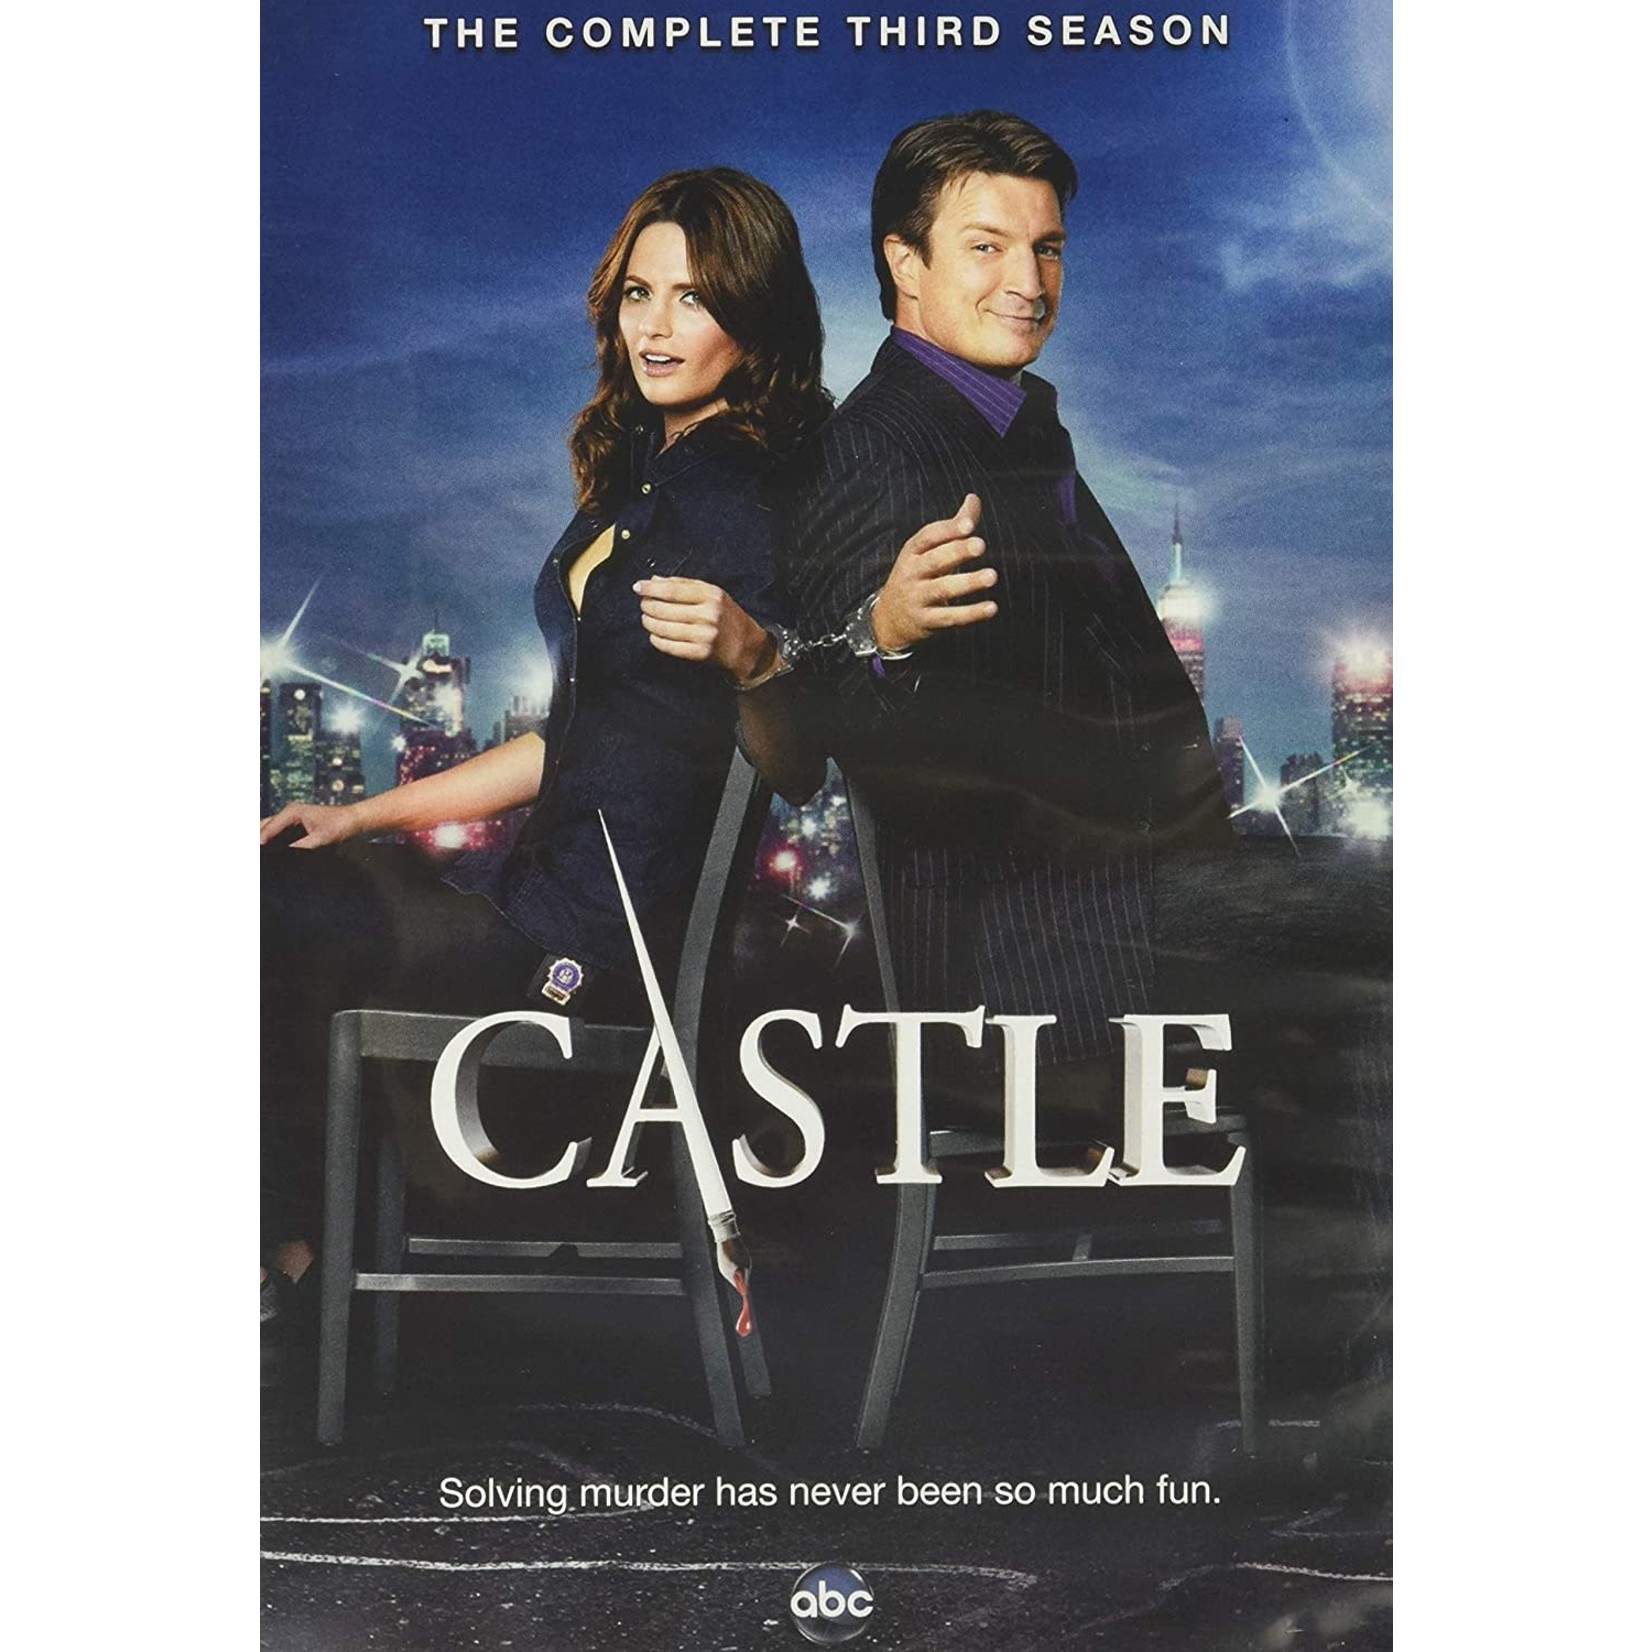 Castle - Season 3 [USED DVD]